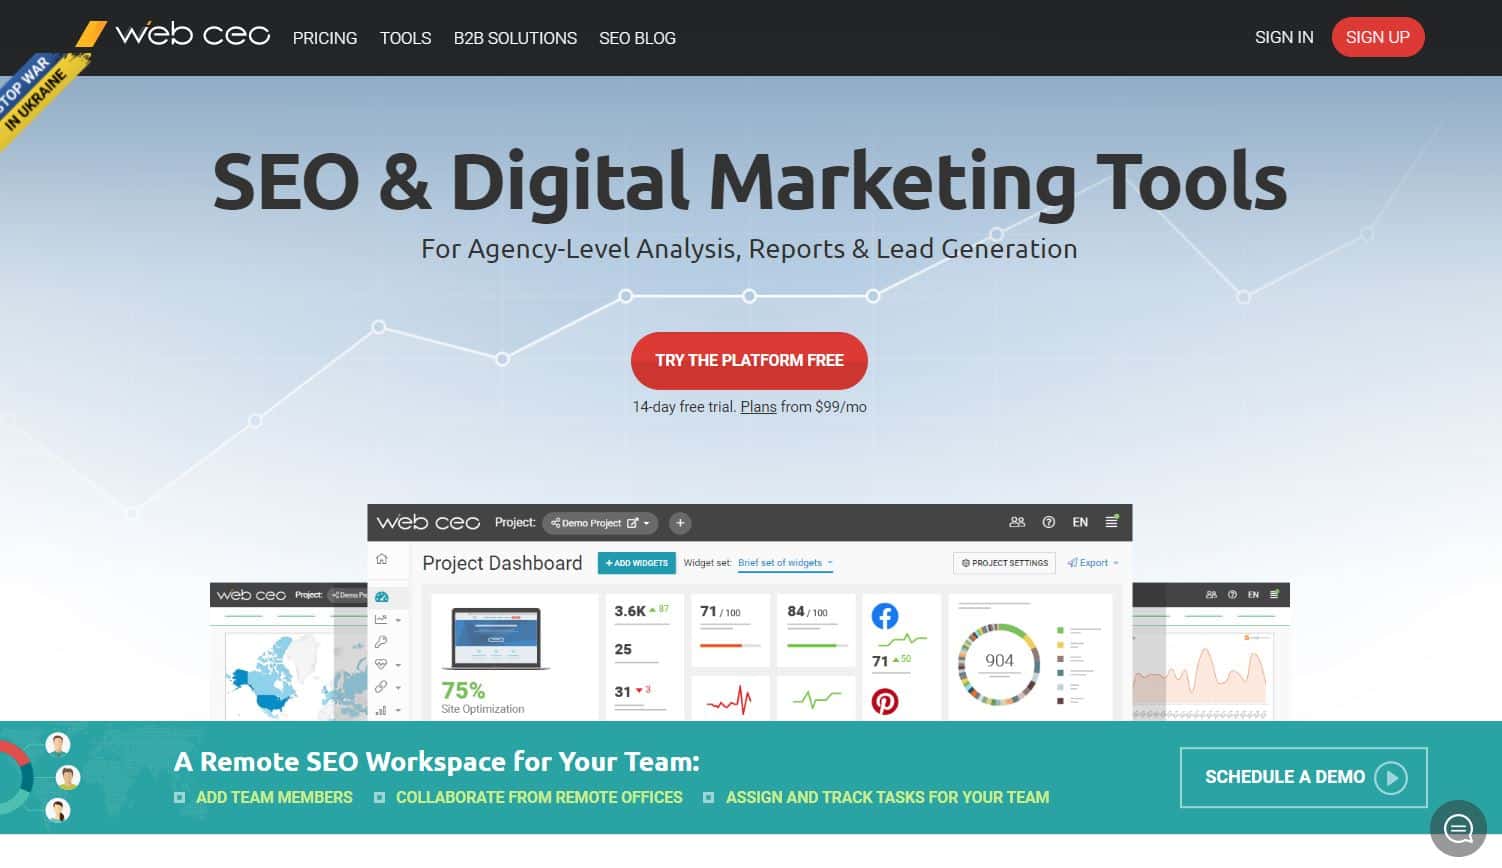 The WebCEO homepage with the headline "SEO & Digital Marketing Tools".